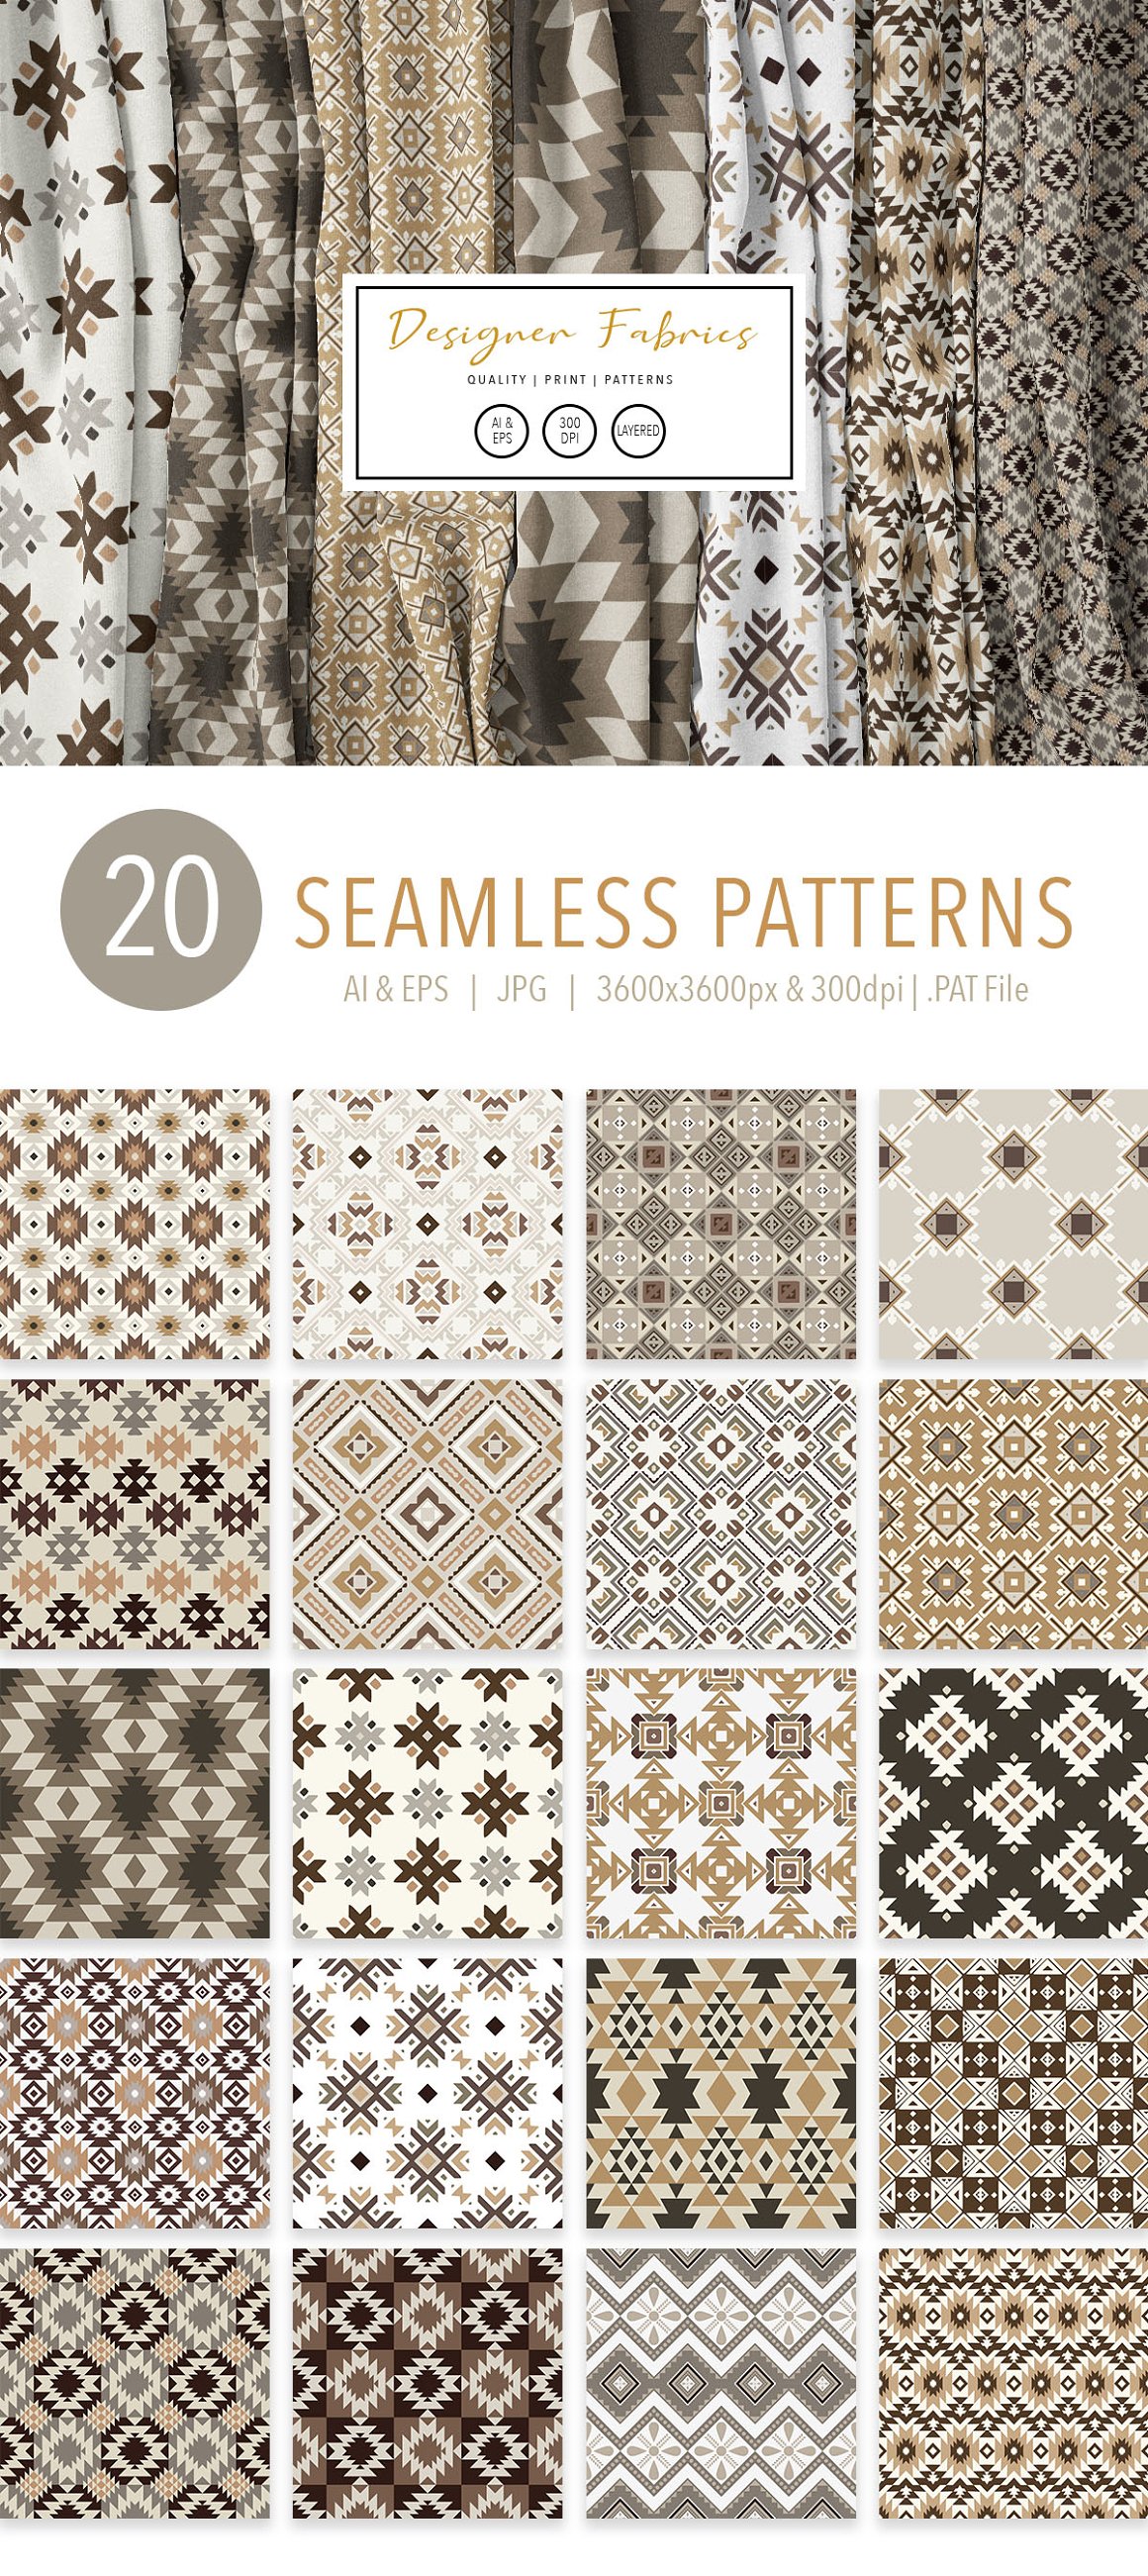 A set of 20 different seamless fabrics patterns.